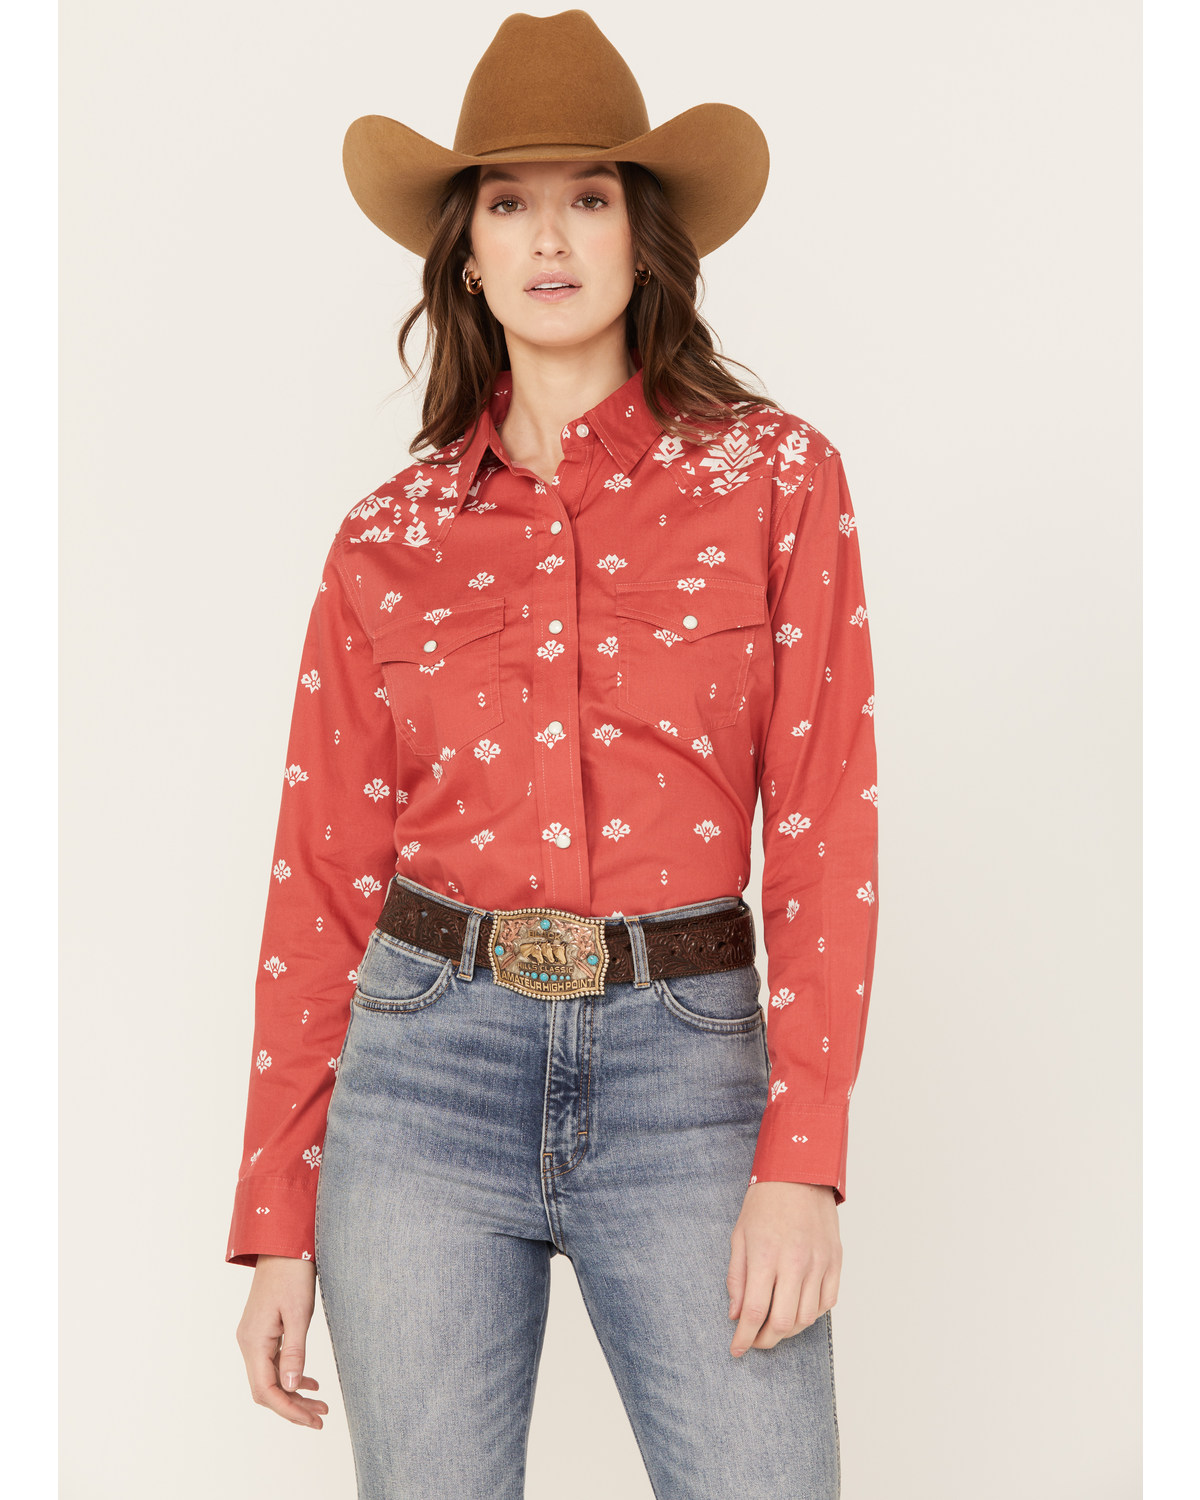 Wrangler Women's Southwestern Print Long Sleeve Western Pearl Snap Shirt